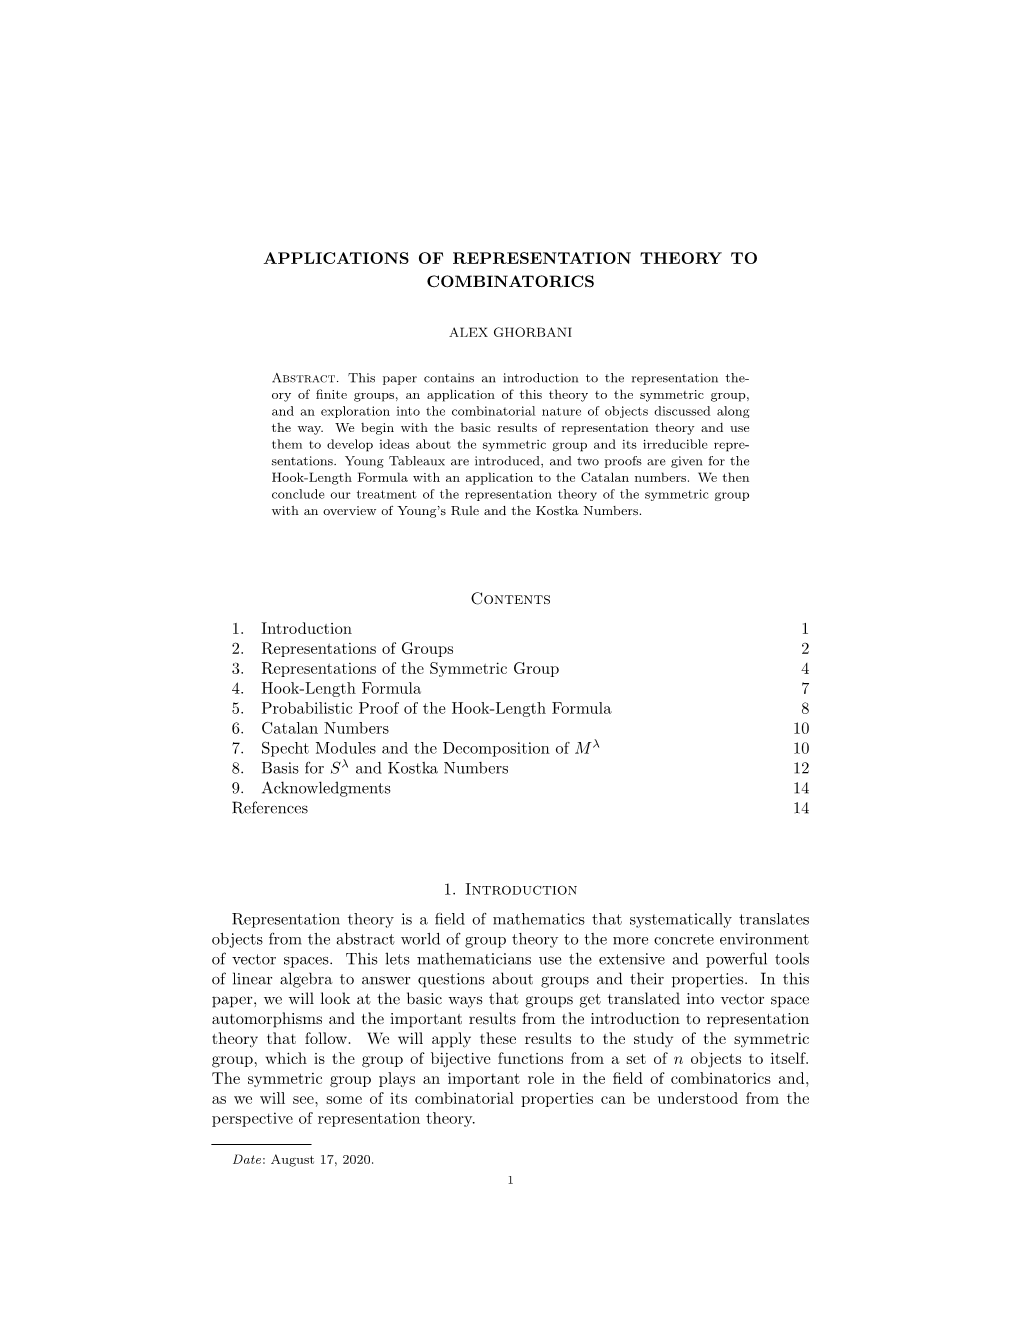 Applications of Representation Theory to Combinatorics